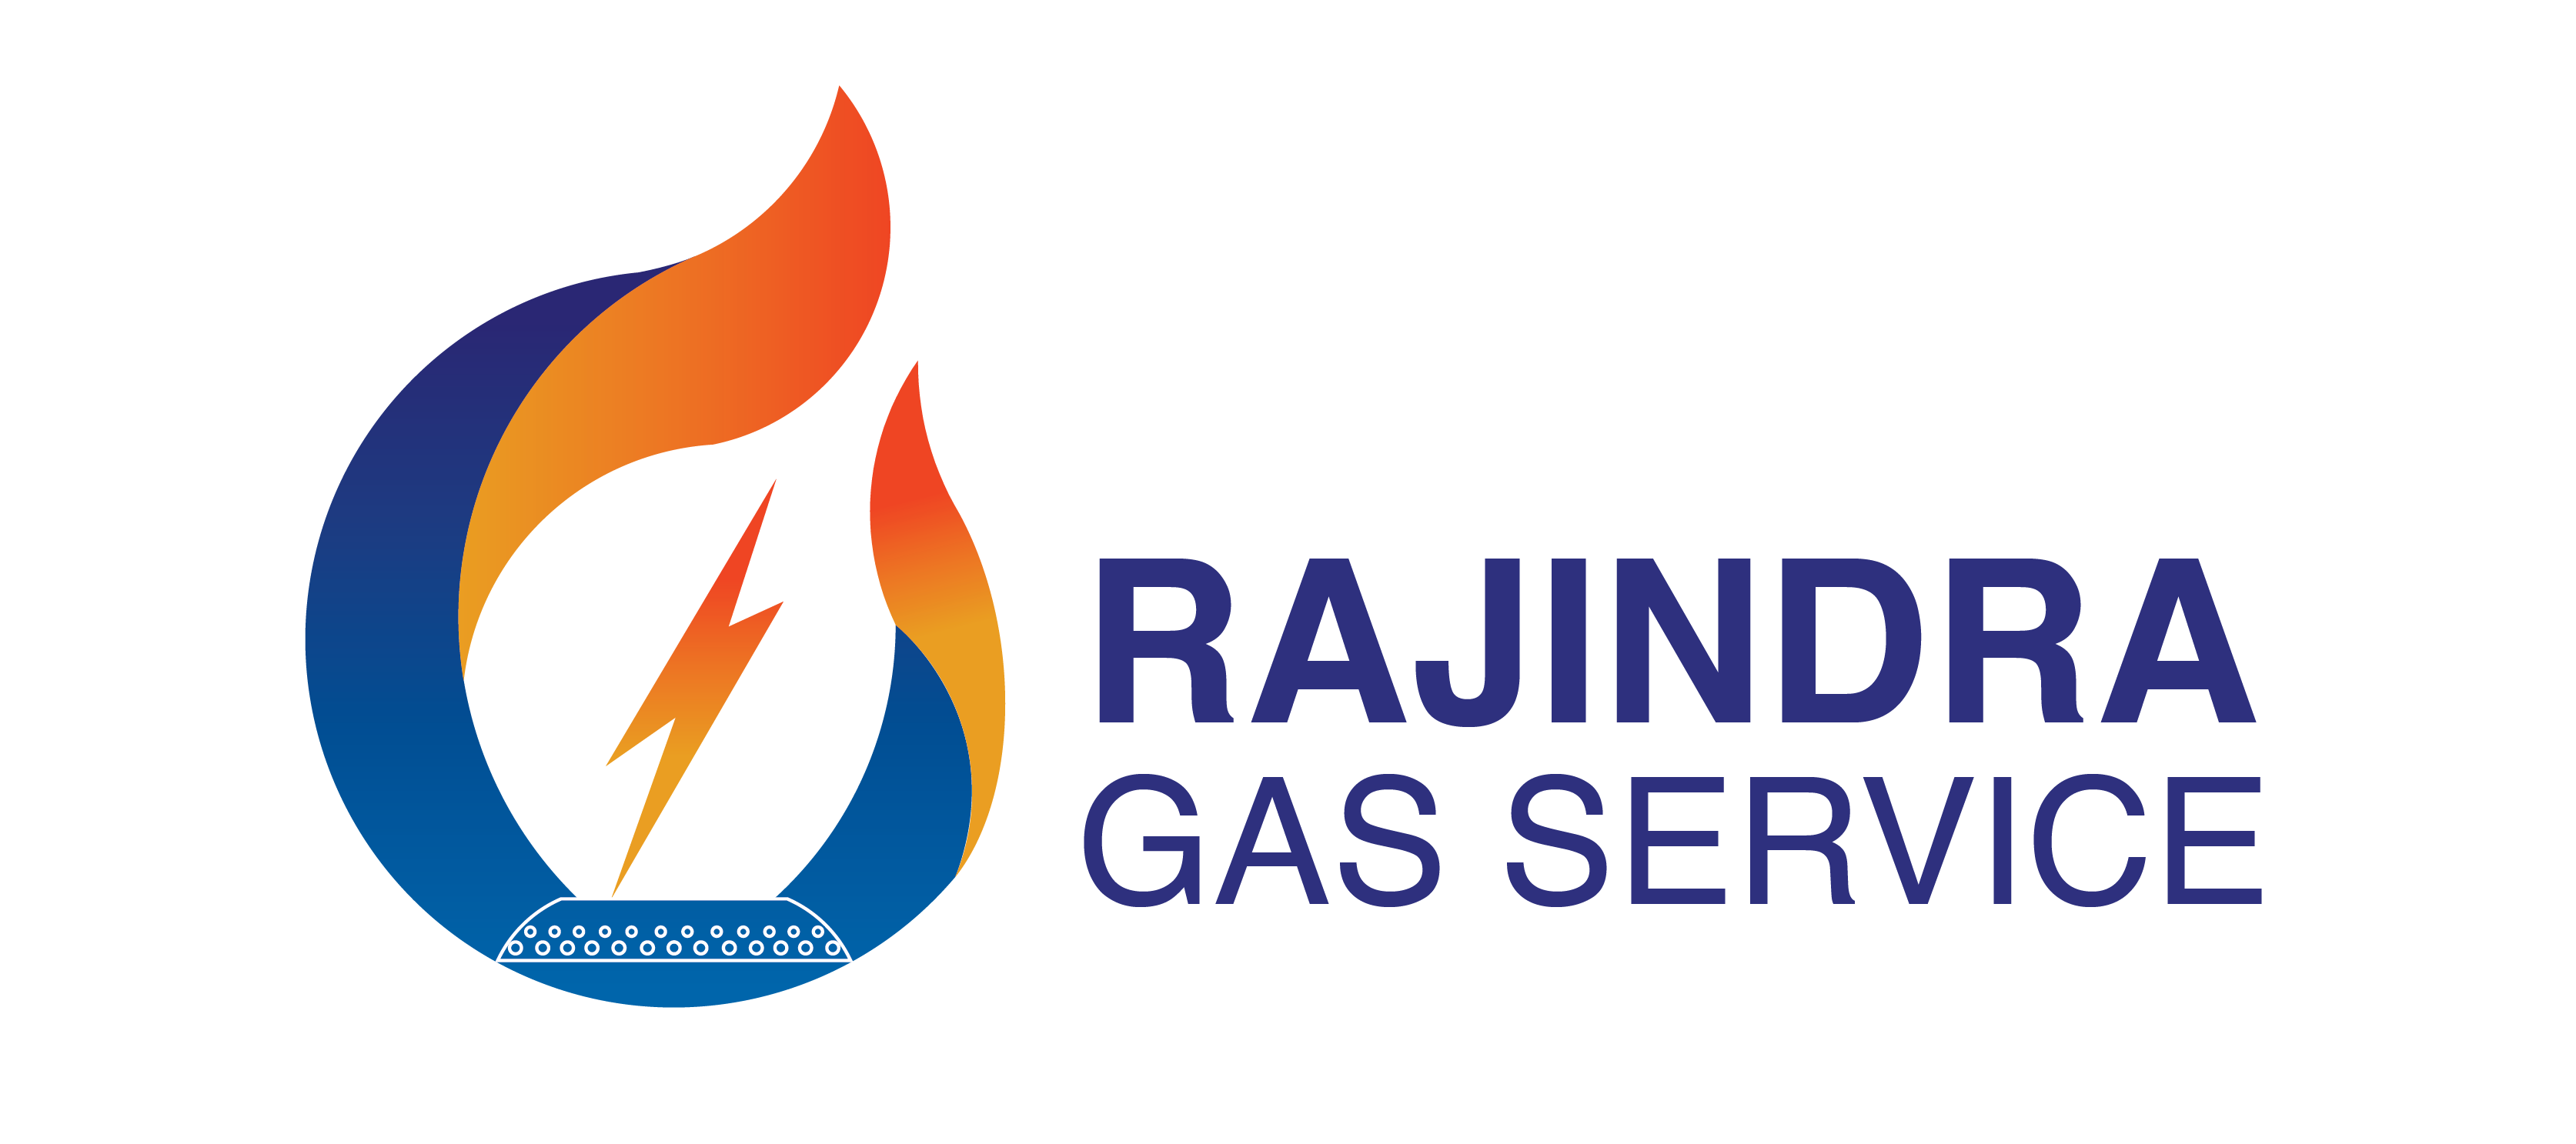 RAJINDRA GAS SERVICE